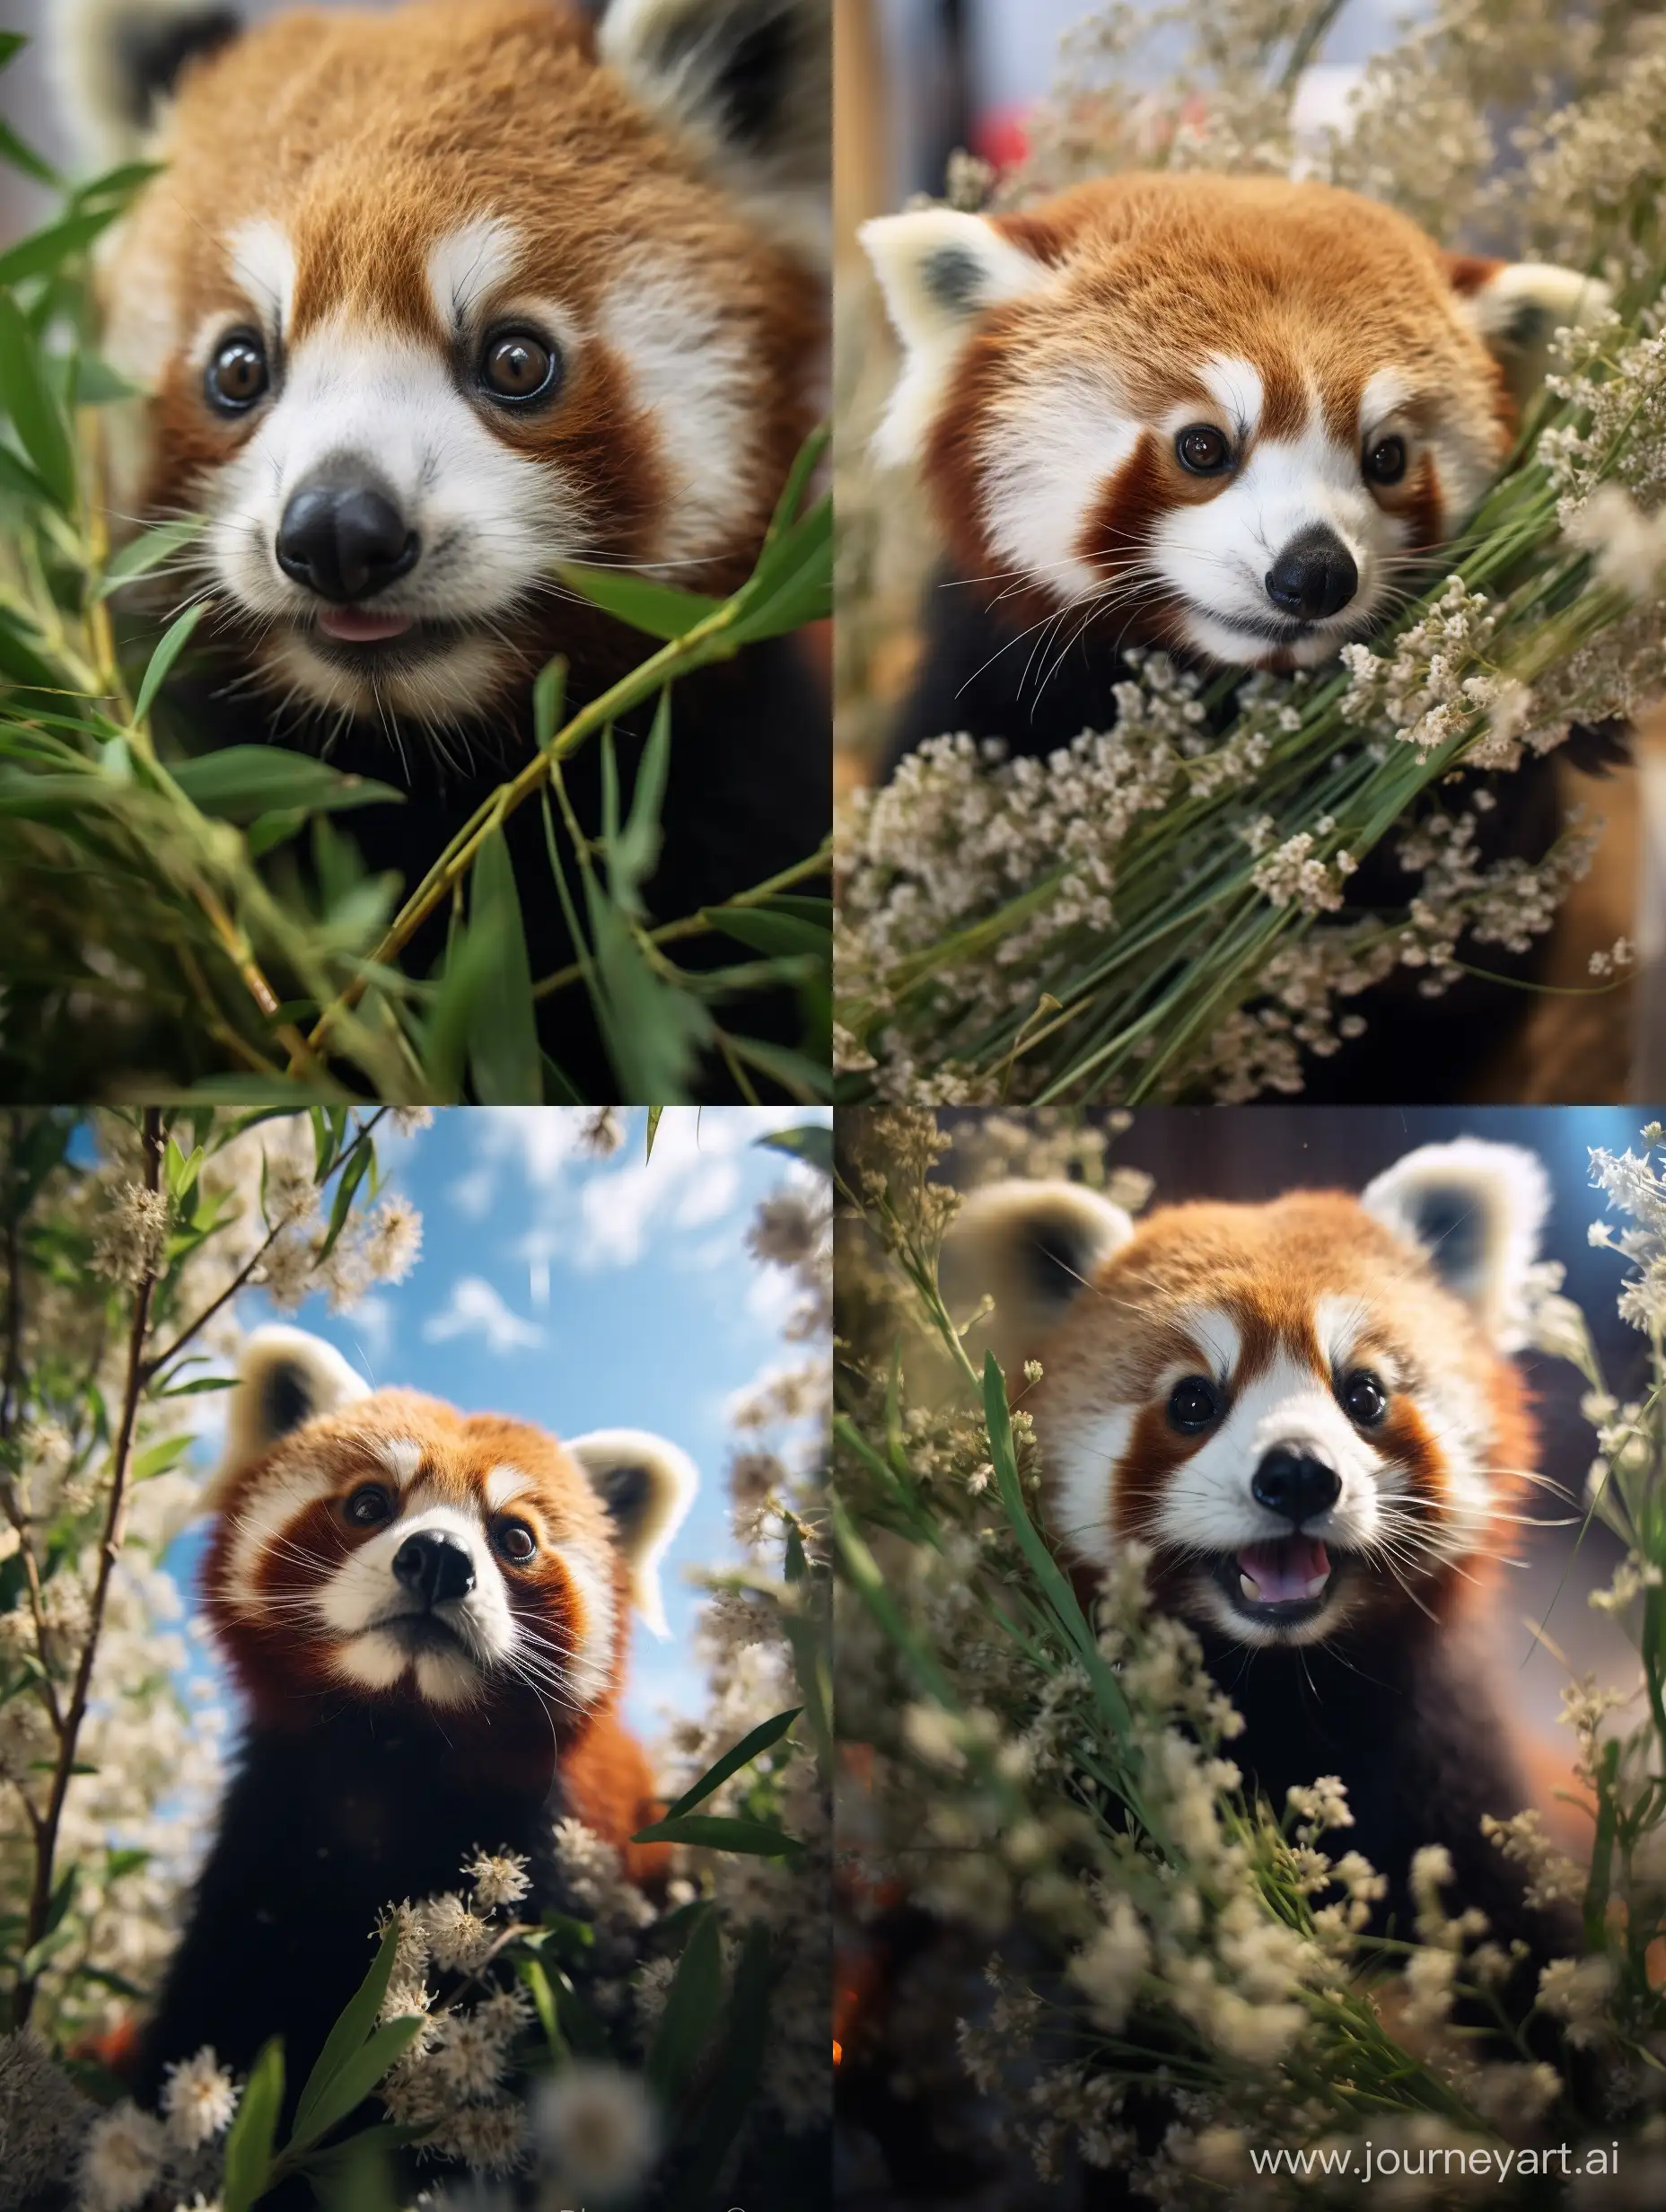 Festive-Red-Panda-Among-Bamboo-High-Detail-Professional-CloseUp-Photo